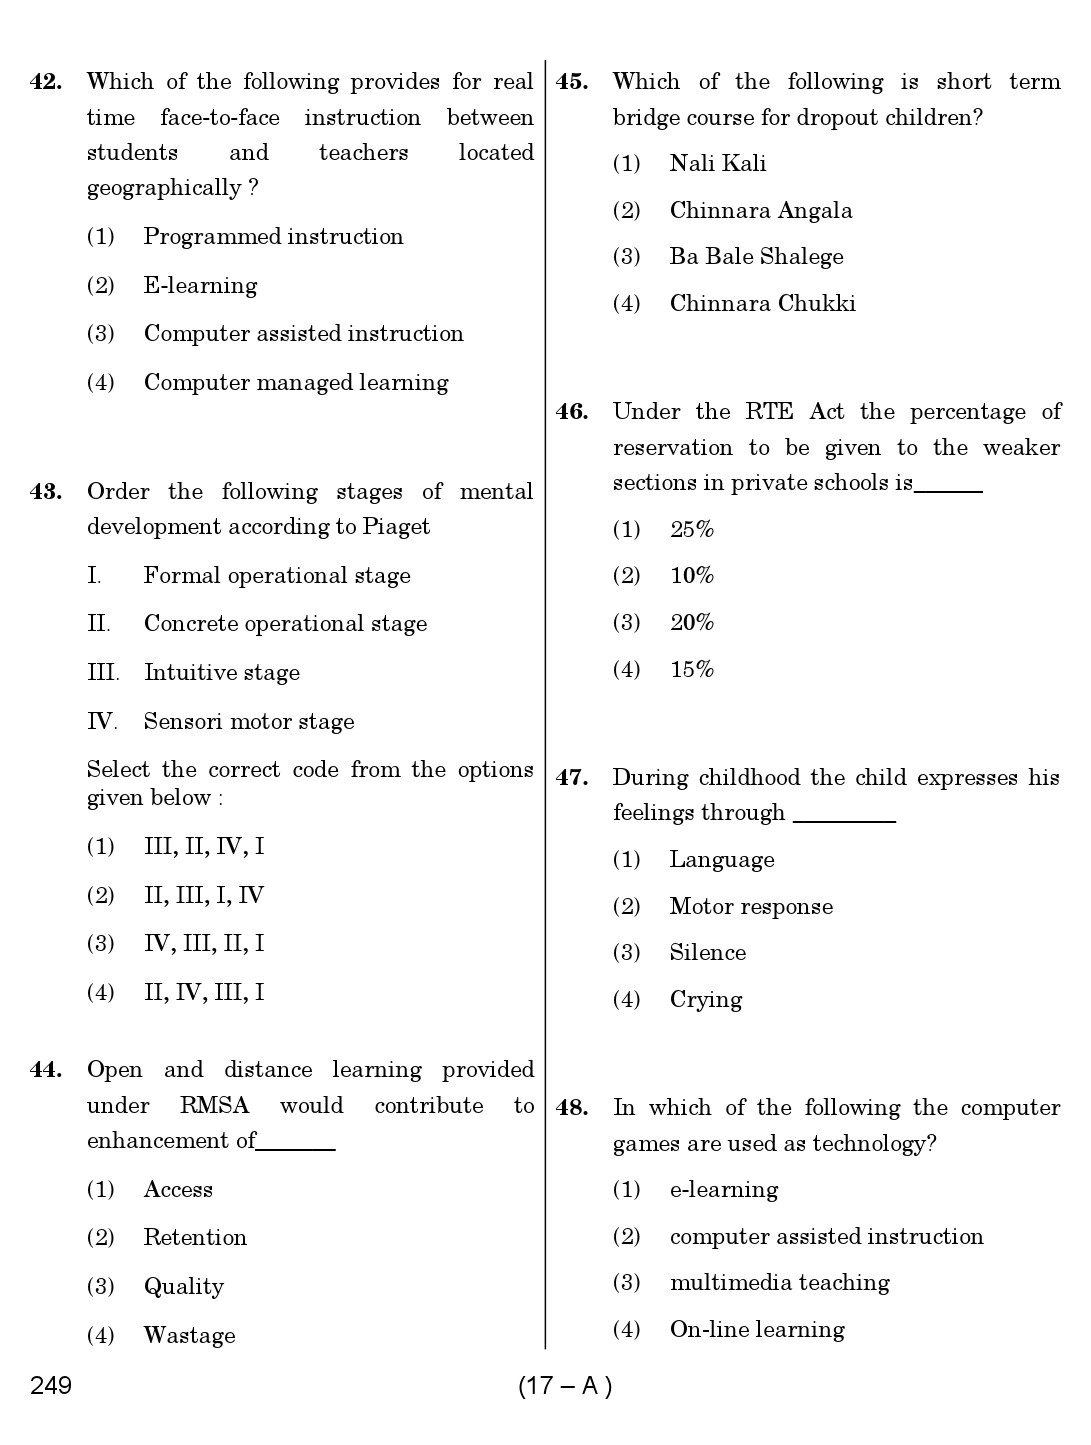 Karnataka PSC Principal Exam Sample Question Paper Subject code 249 17